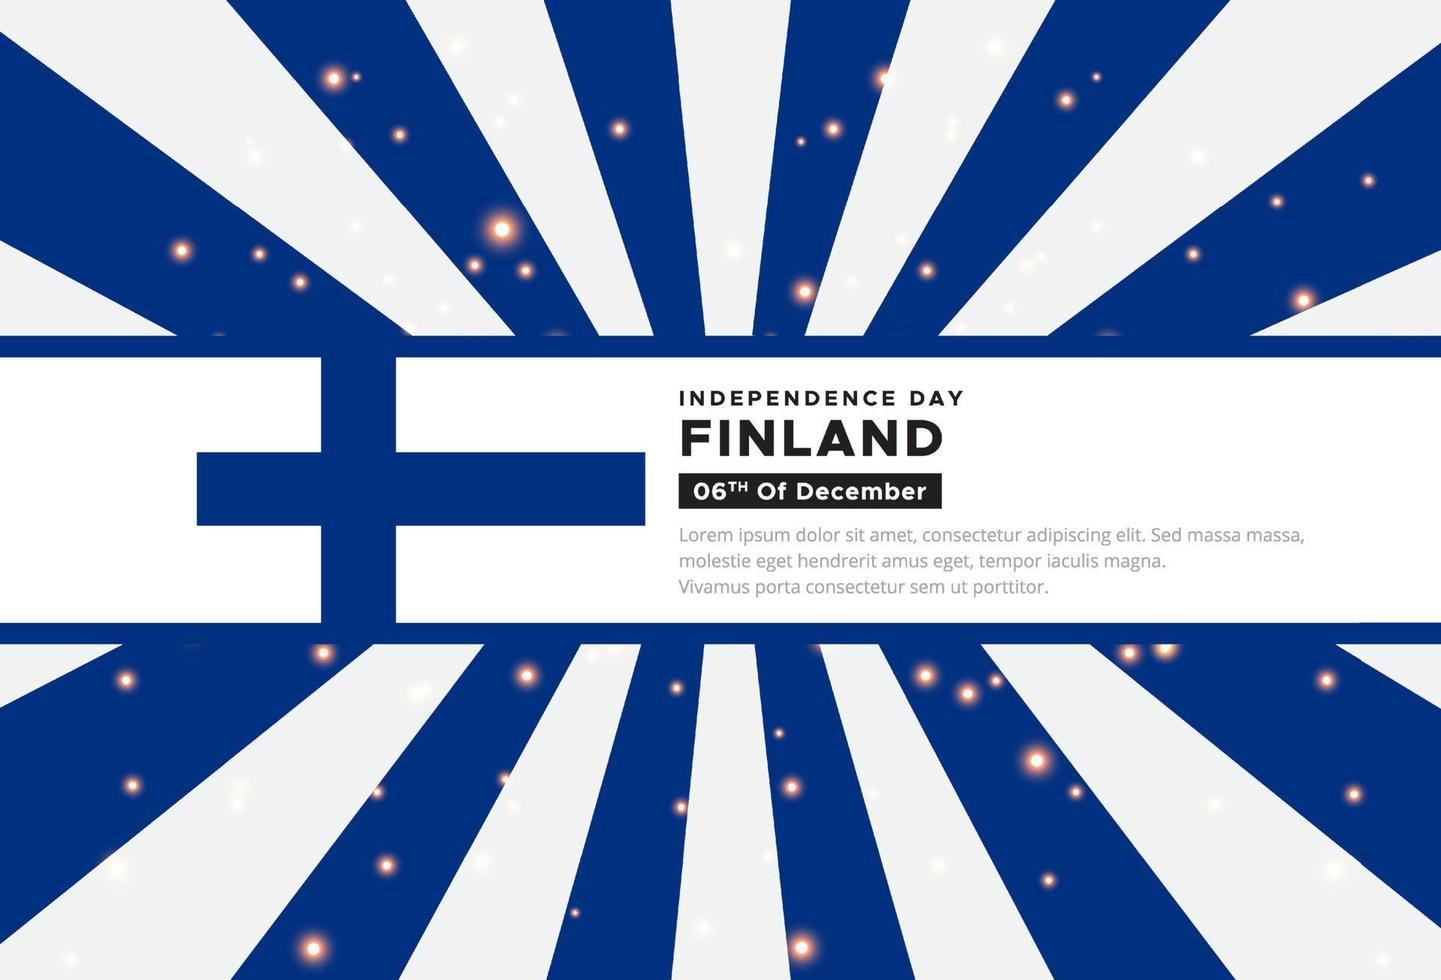 Modern Finland independence day design isolated on sunburst background vector